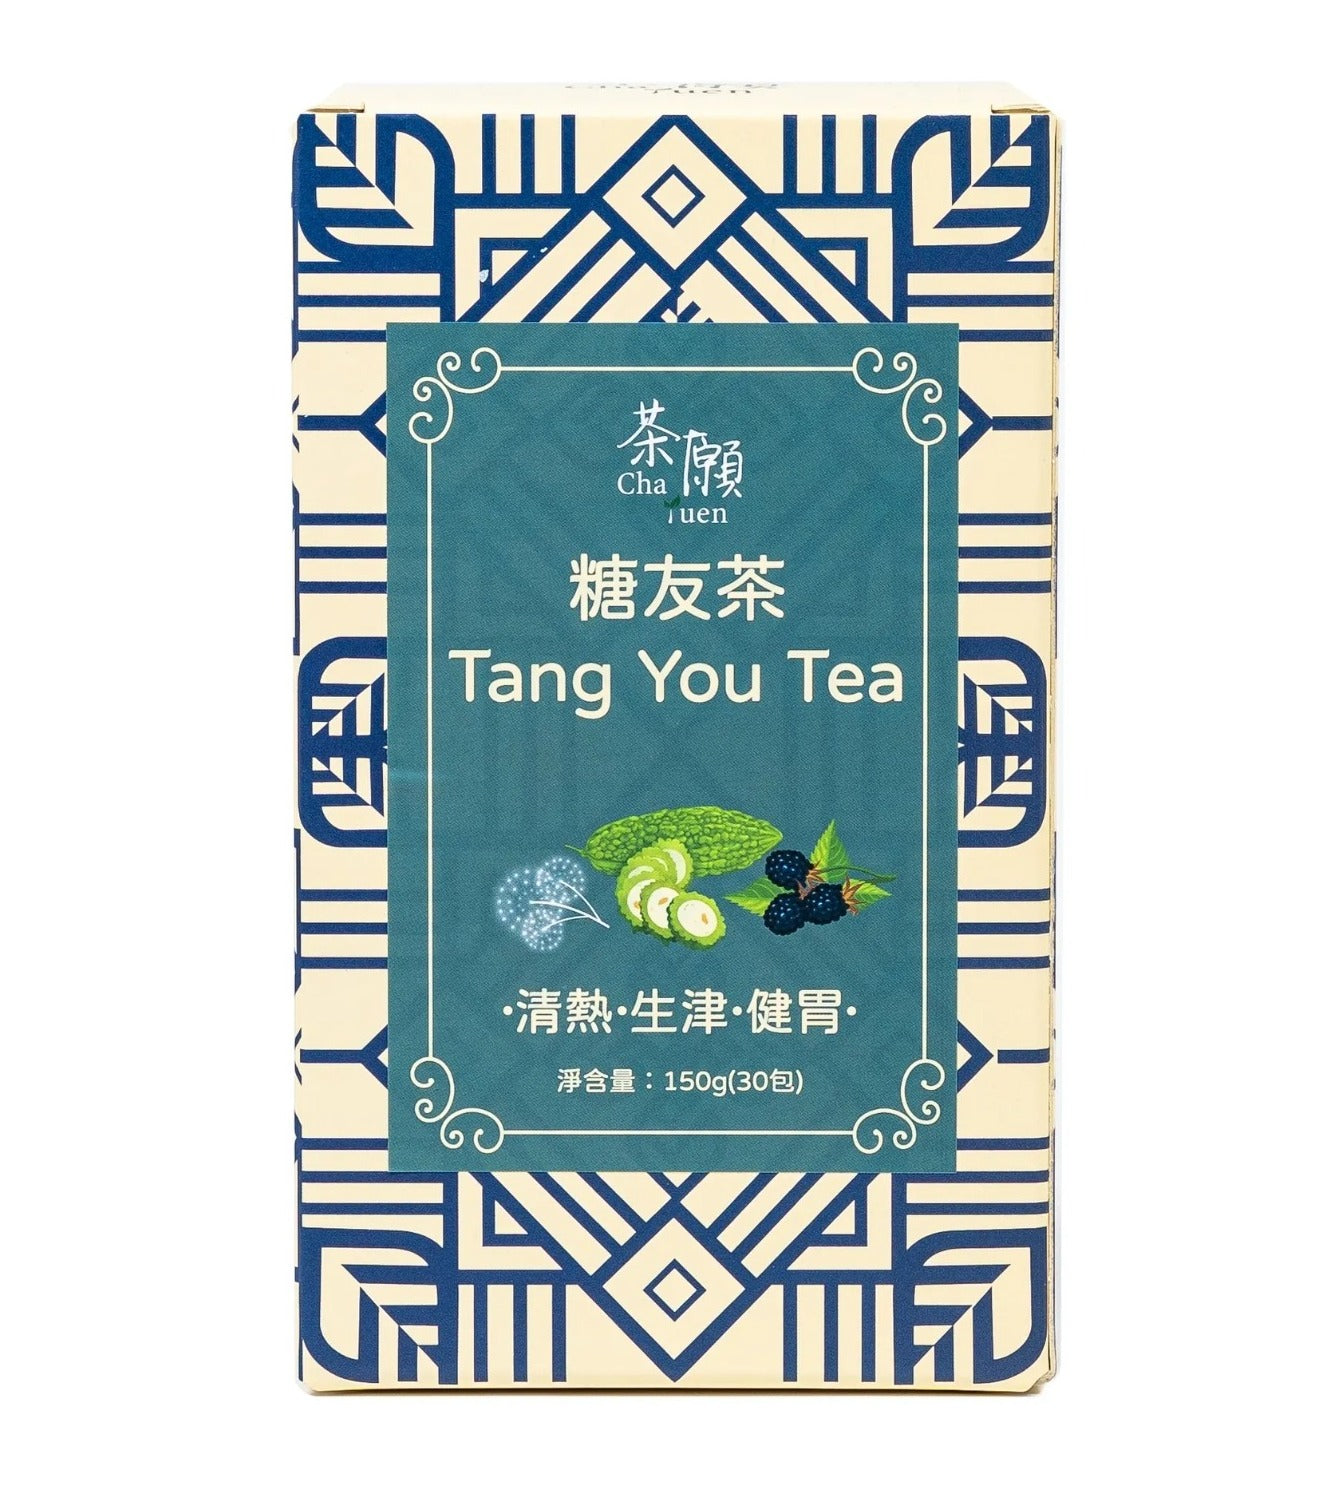 #T3772 糖友茶  150克 (30包) Tang You Tea 150g